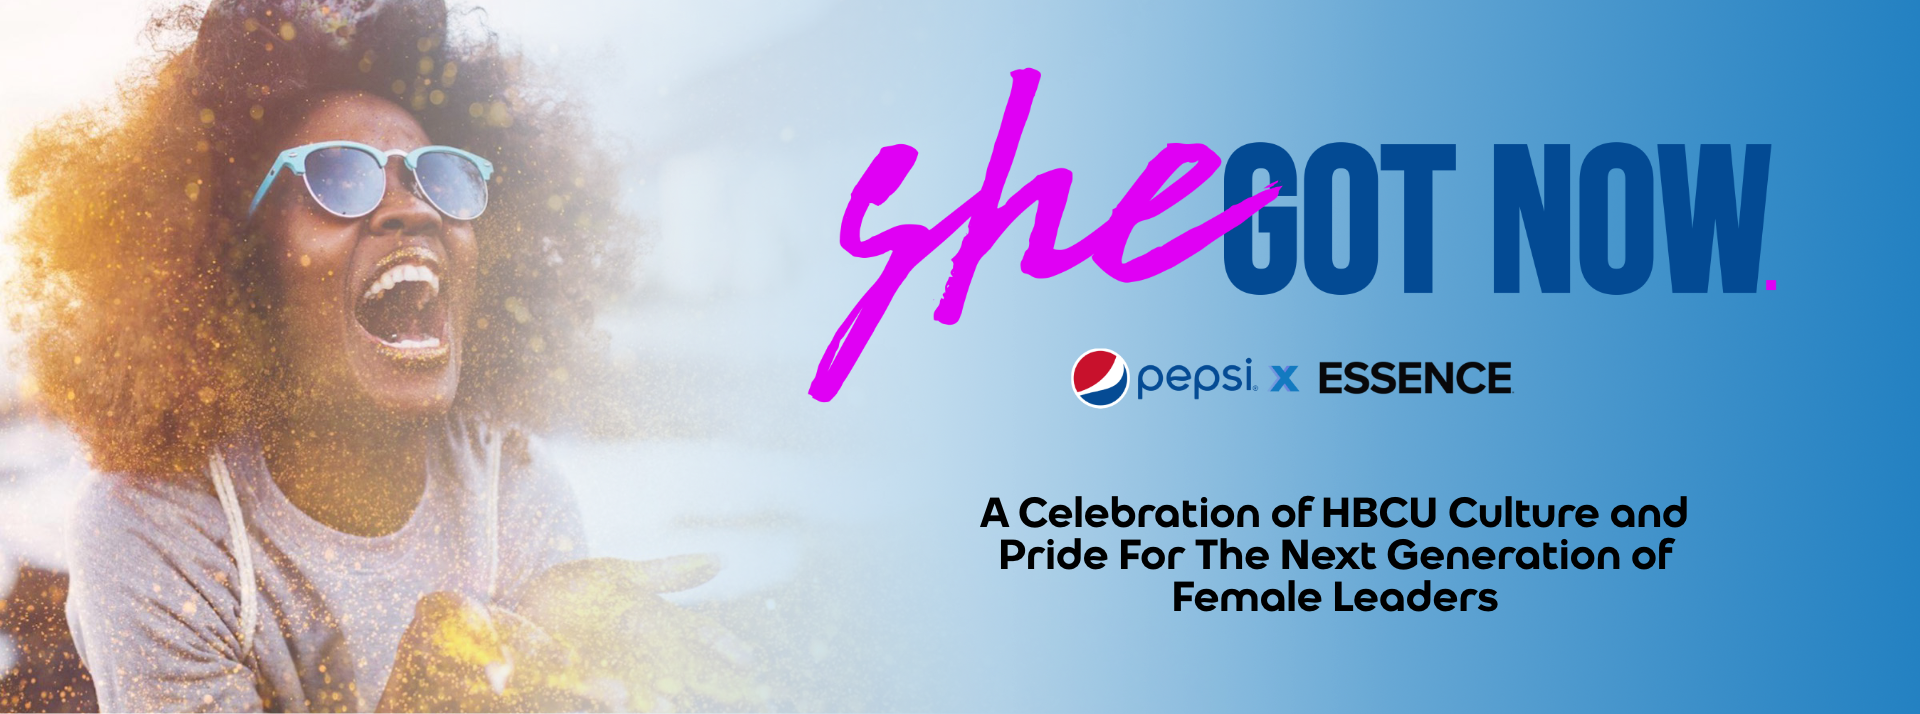 Pepsi x Essence's She Got Now: 2021 HBCU Homecoming Celebration